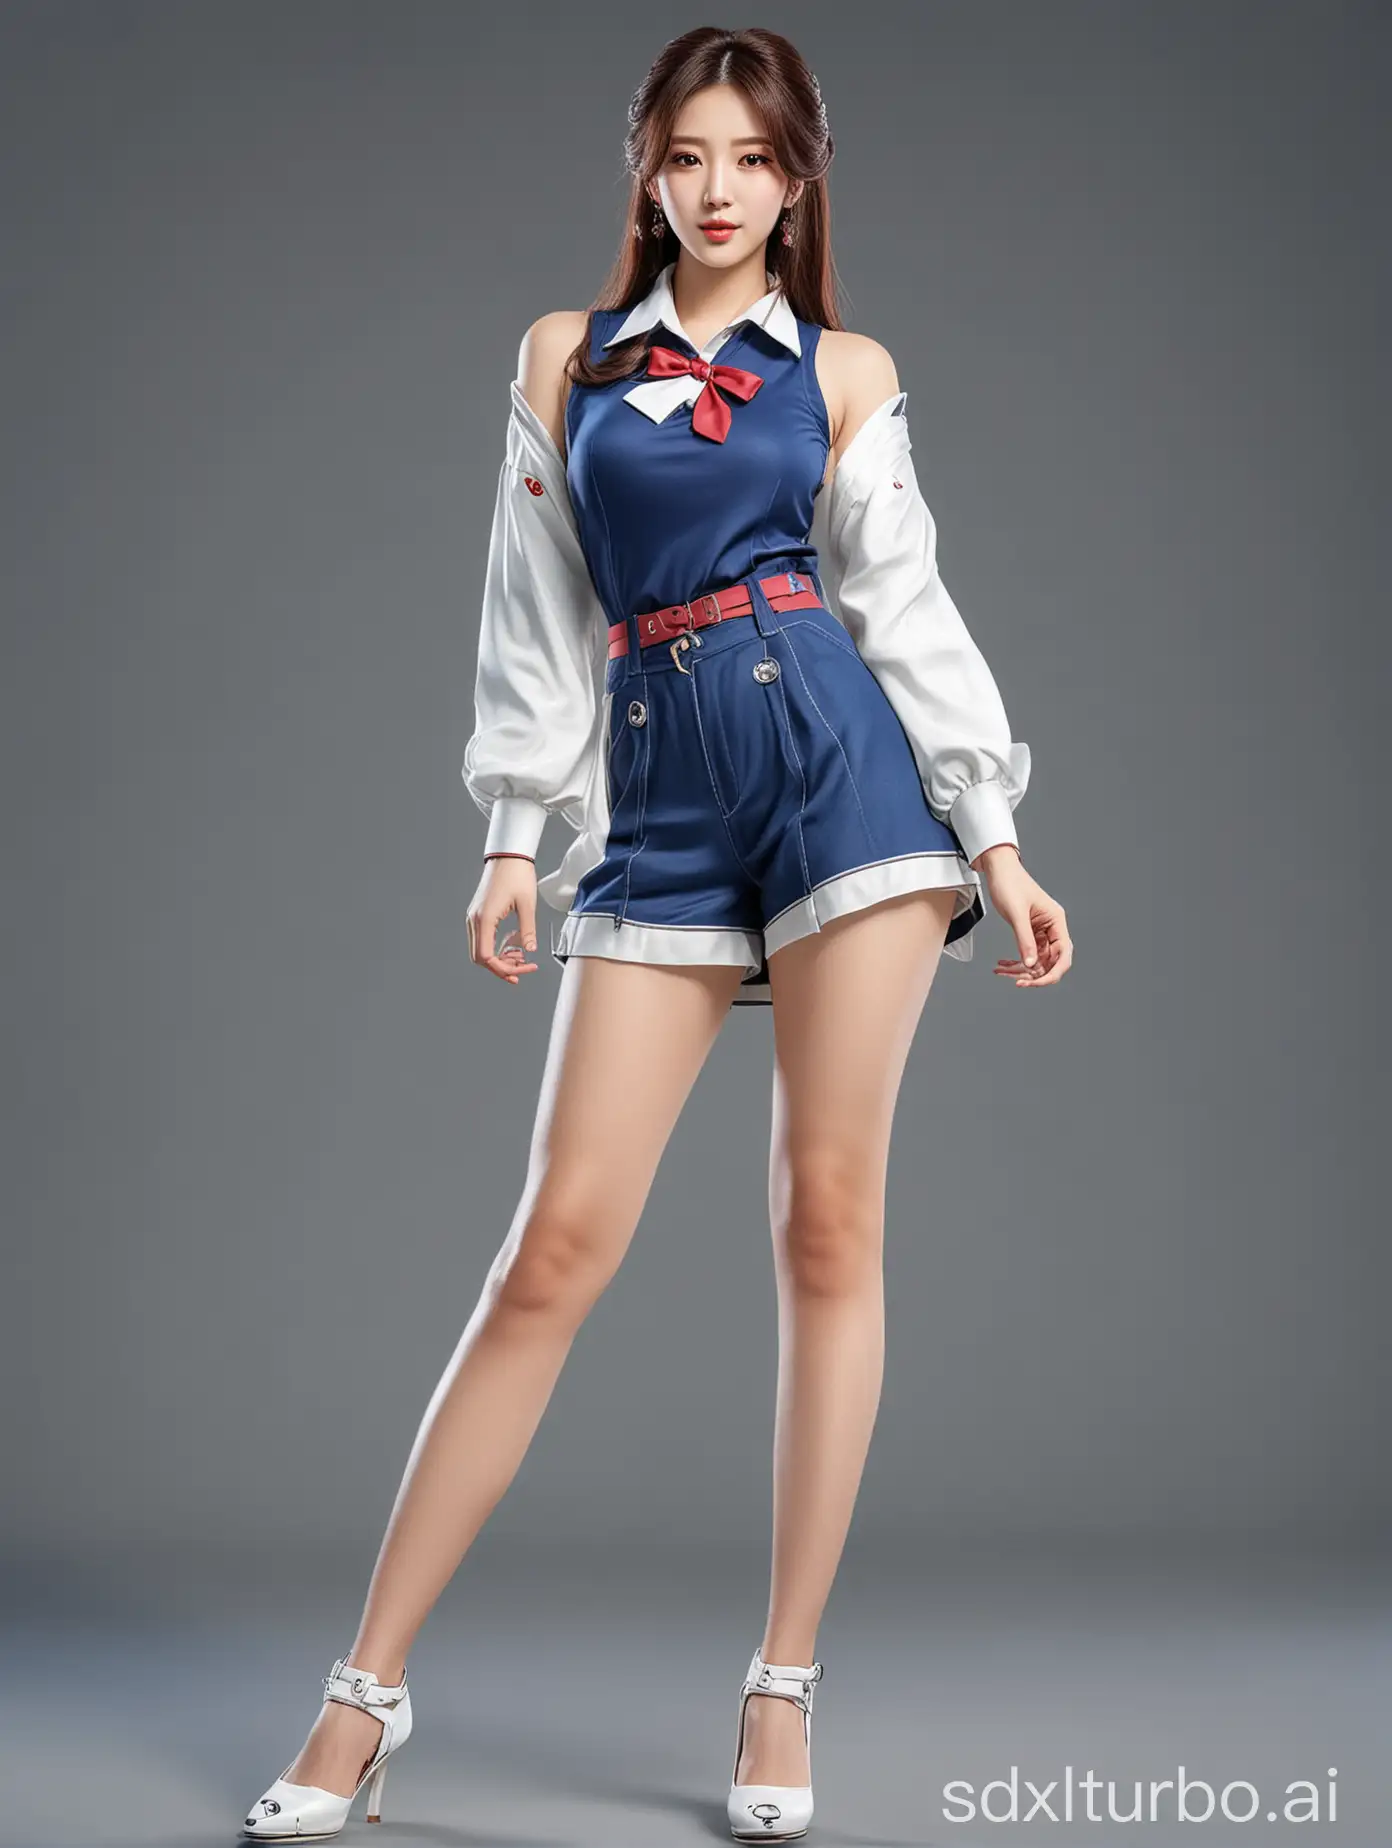 Stylish-Korean-Video-Game-Girl-Character-Portrait